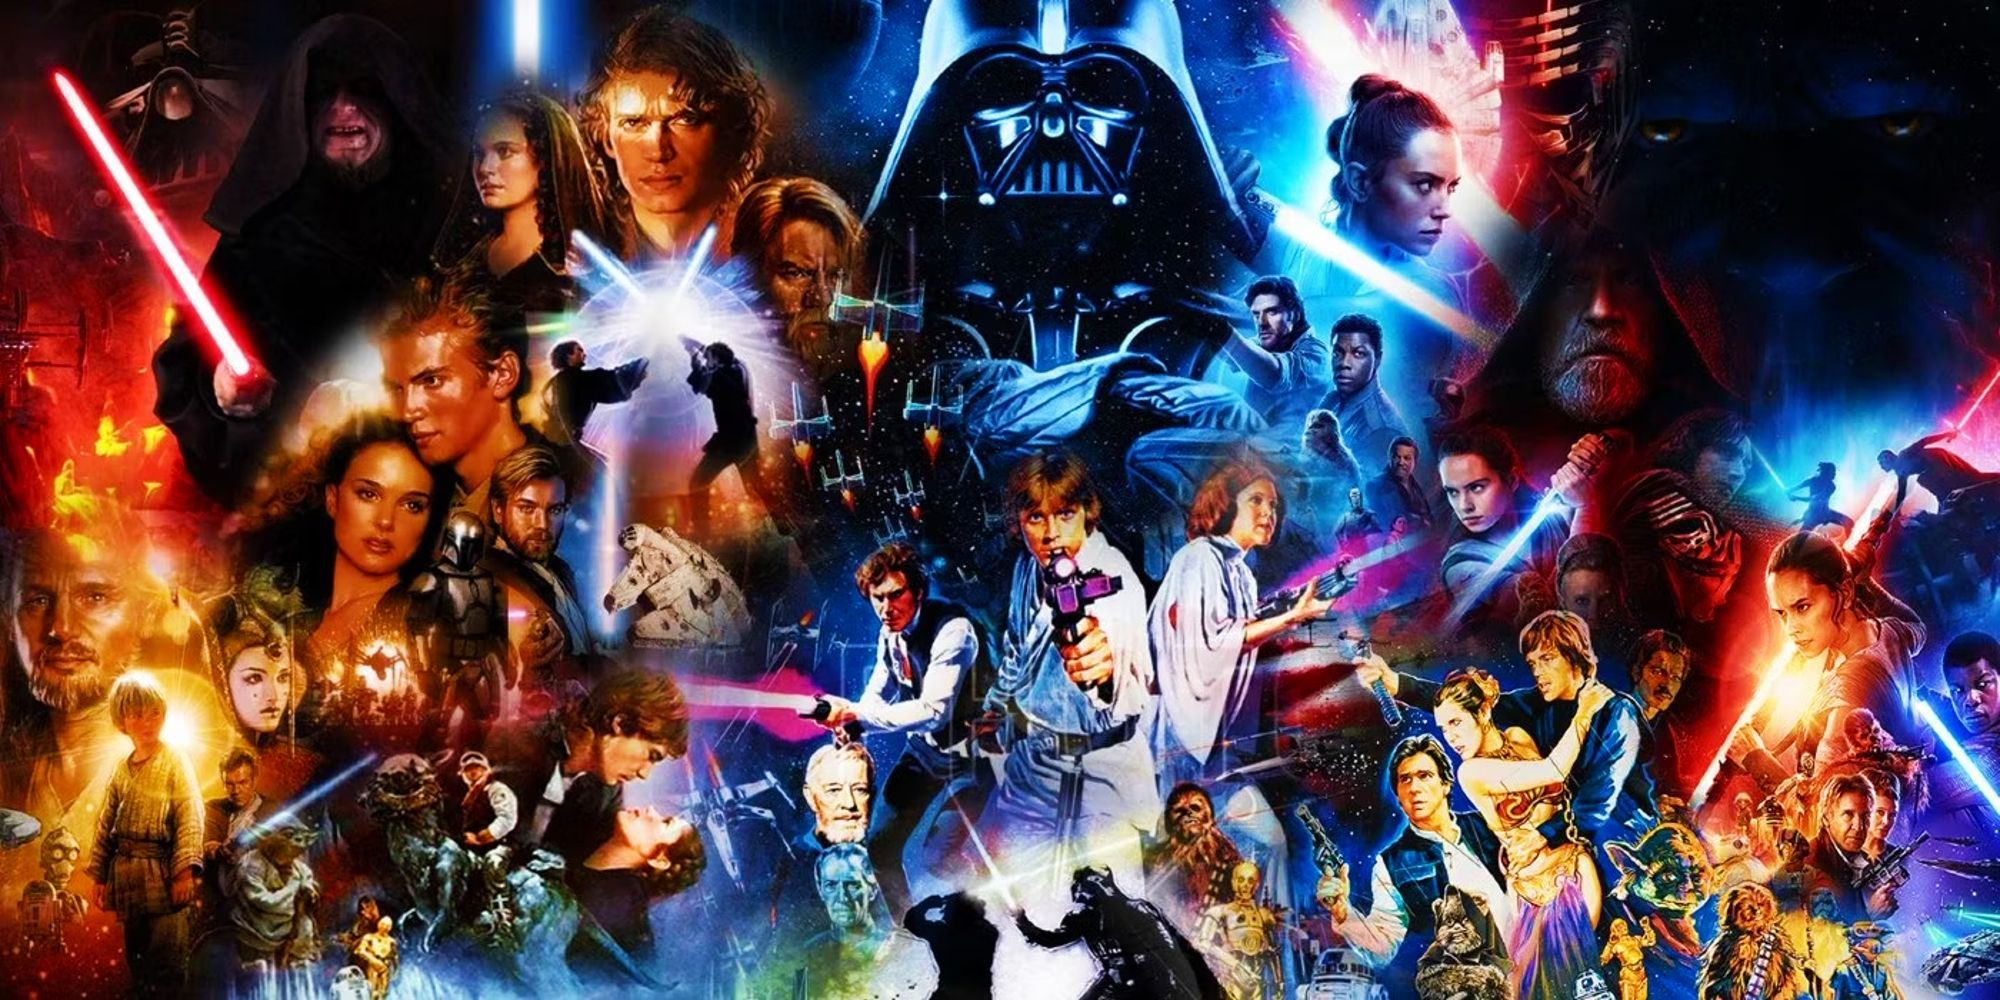 How The Skywalker Saga Marathon Changed My Star Wars Experience As A Lifelong Fan